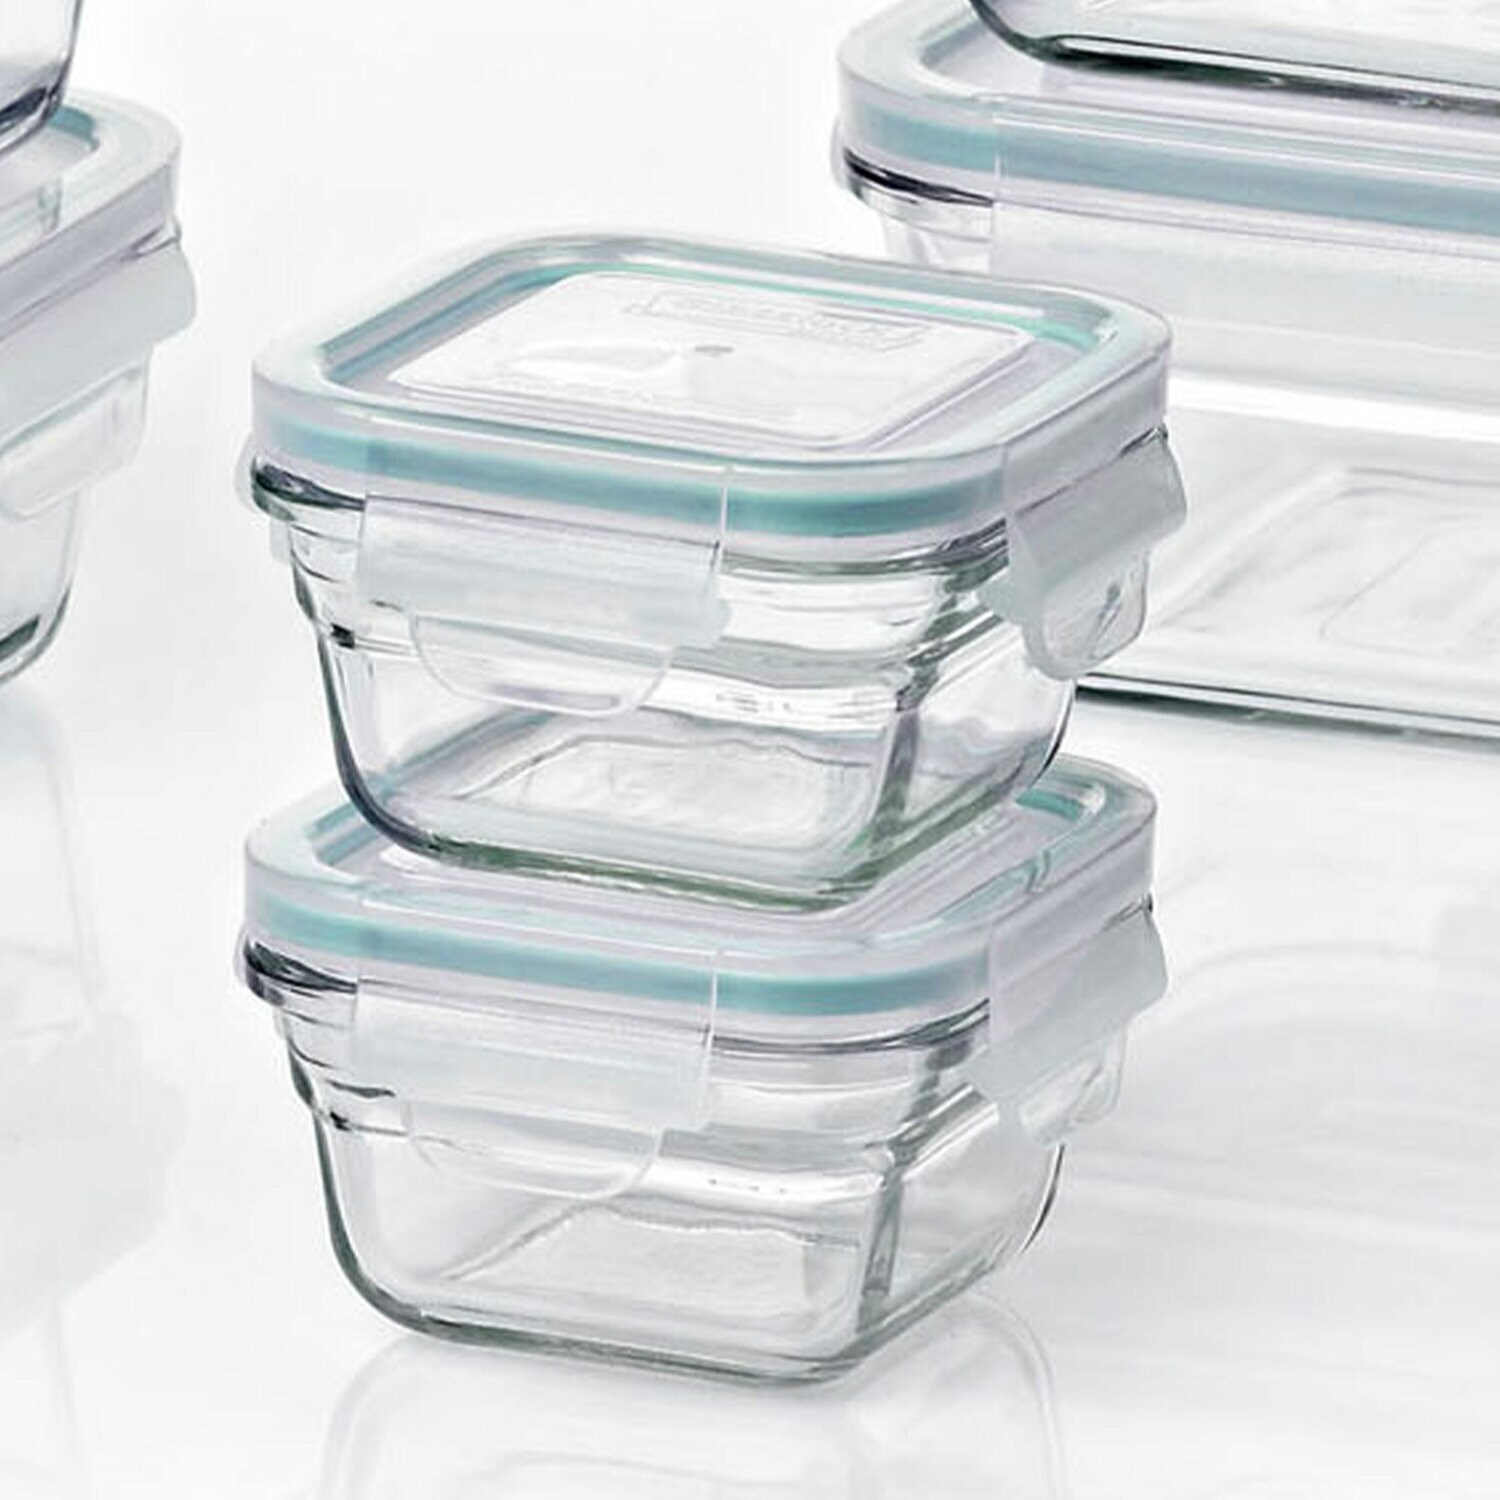  GLASSLOCK Vacuum seal food storage container Set of 2